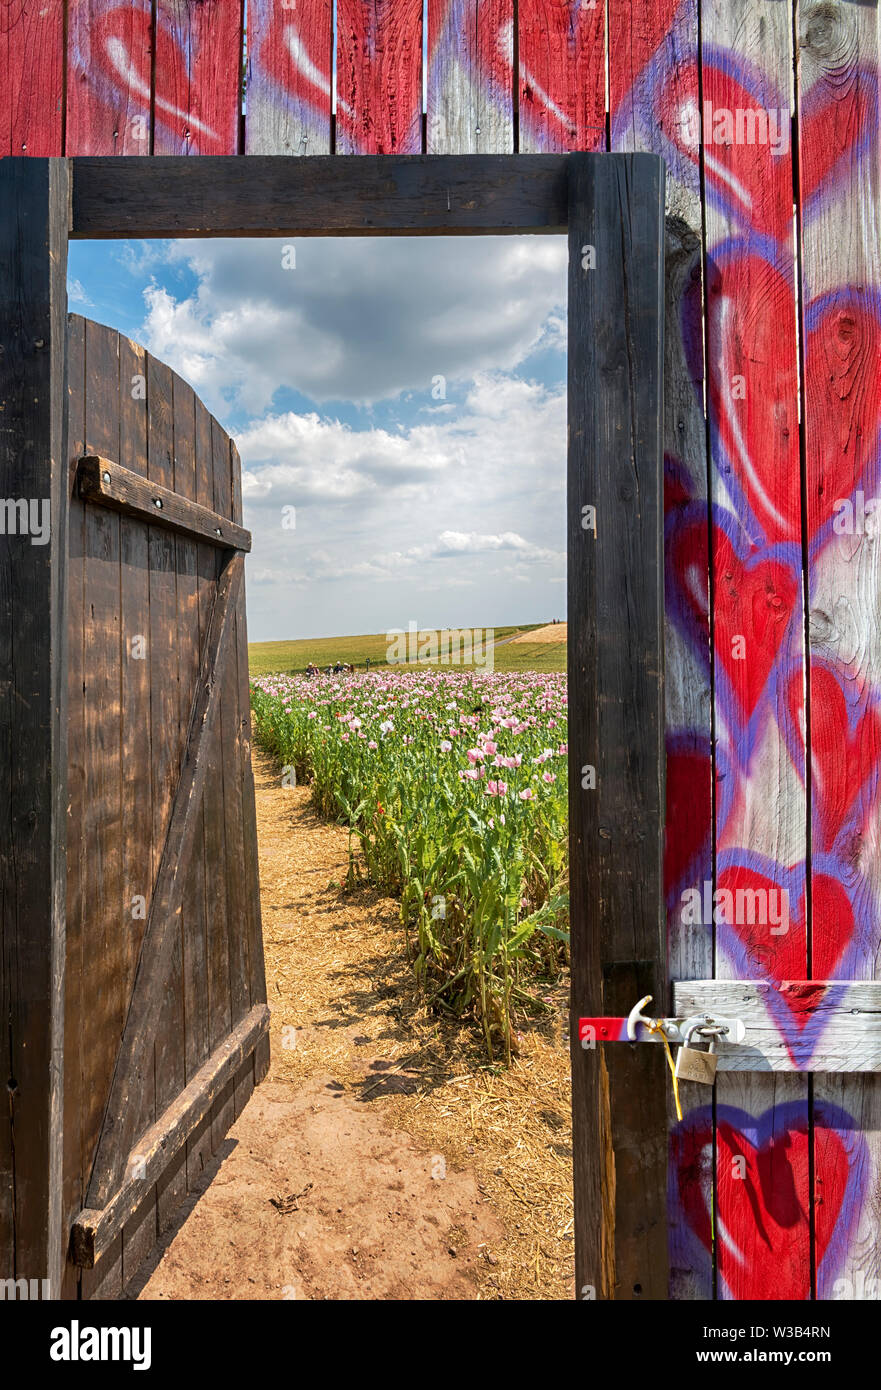 Gate in an Opium poppy field, Germerode, Werra-Meissner district, Hesse, Germany, photomontage Stock Photo